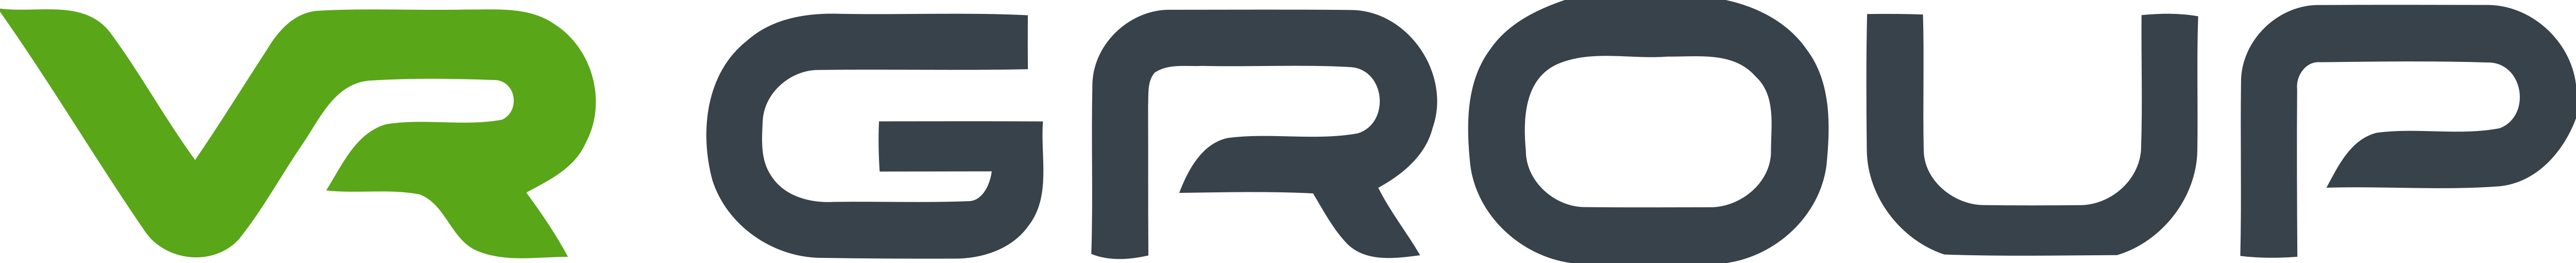 VR Group. VR логотип. Group логотип. VR Group лого.